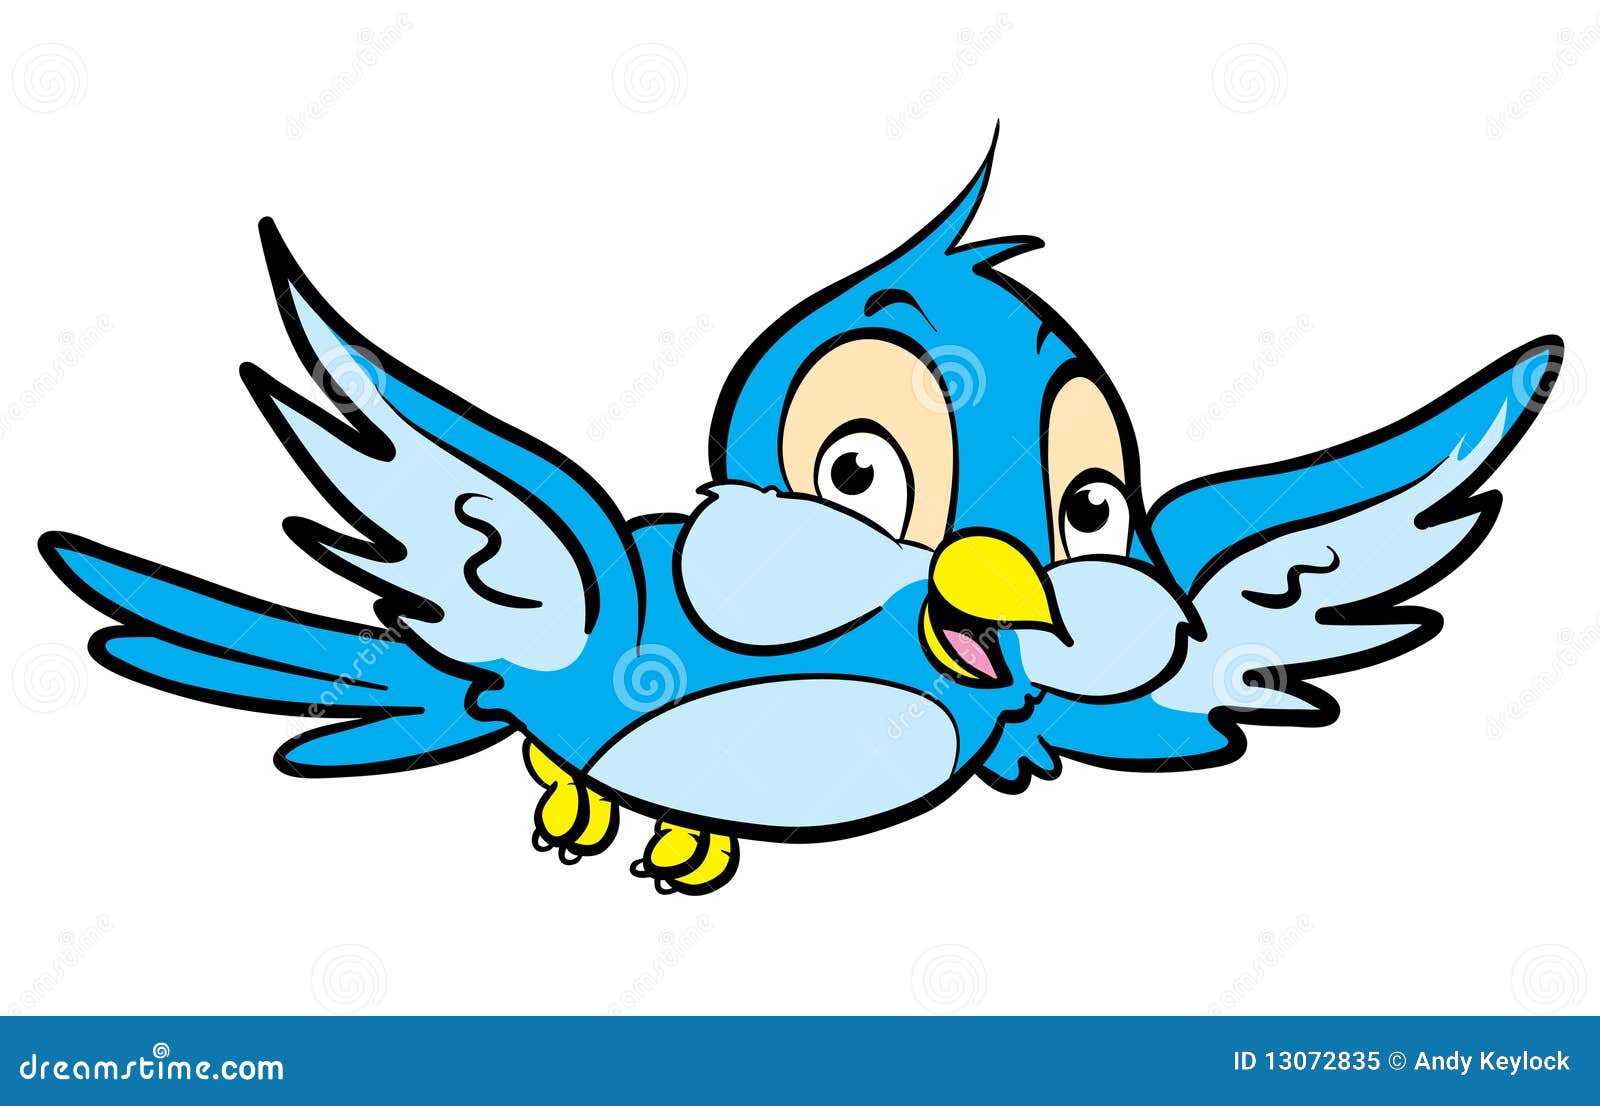 cartoon-bird-13072835.jpg